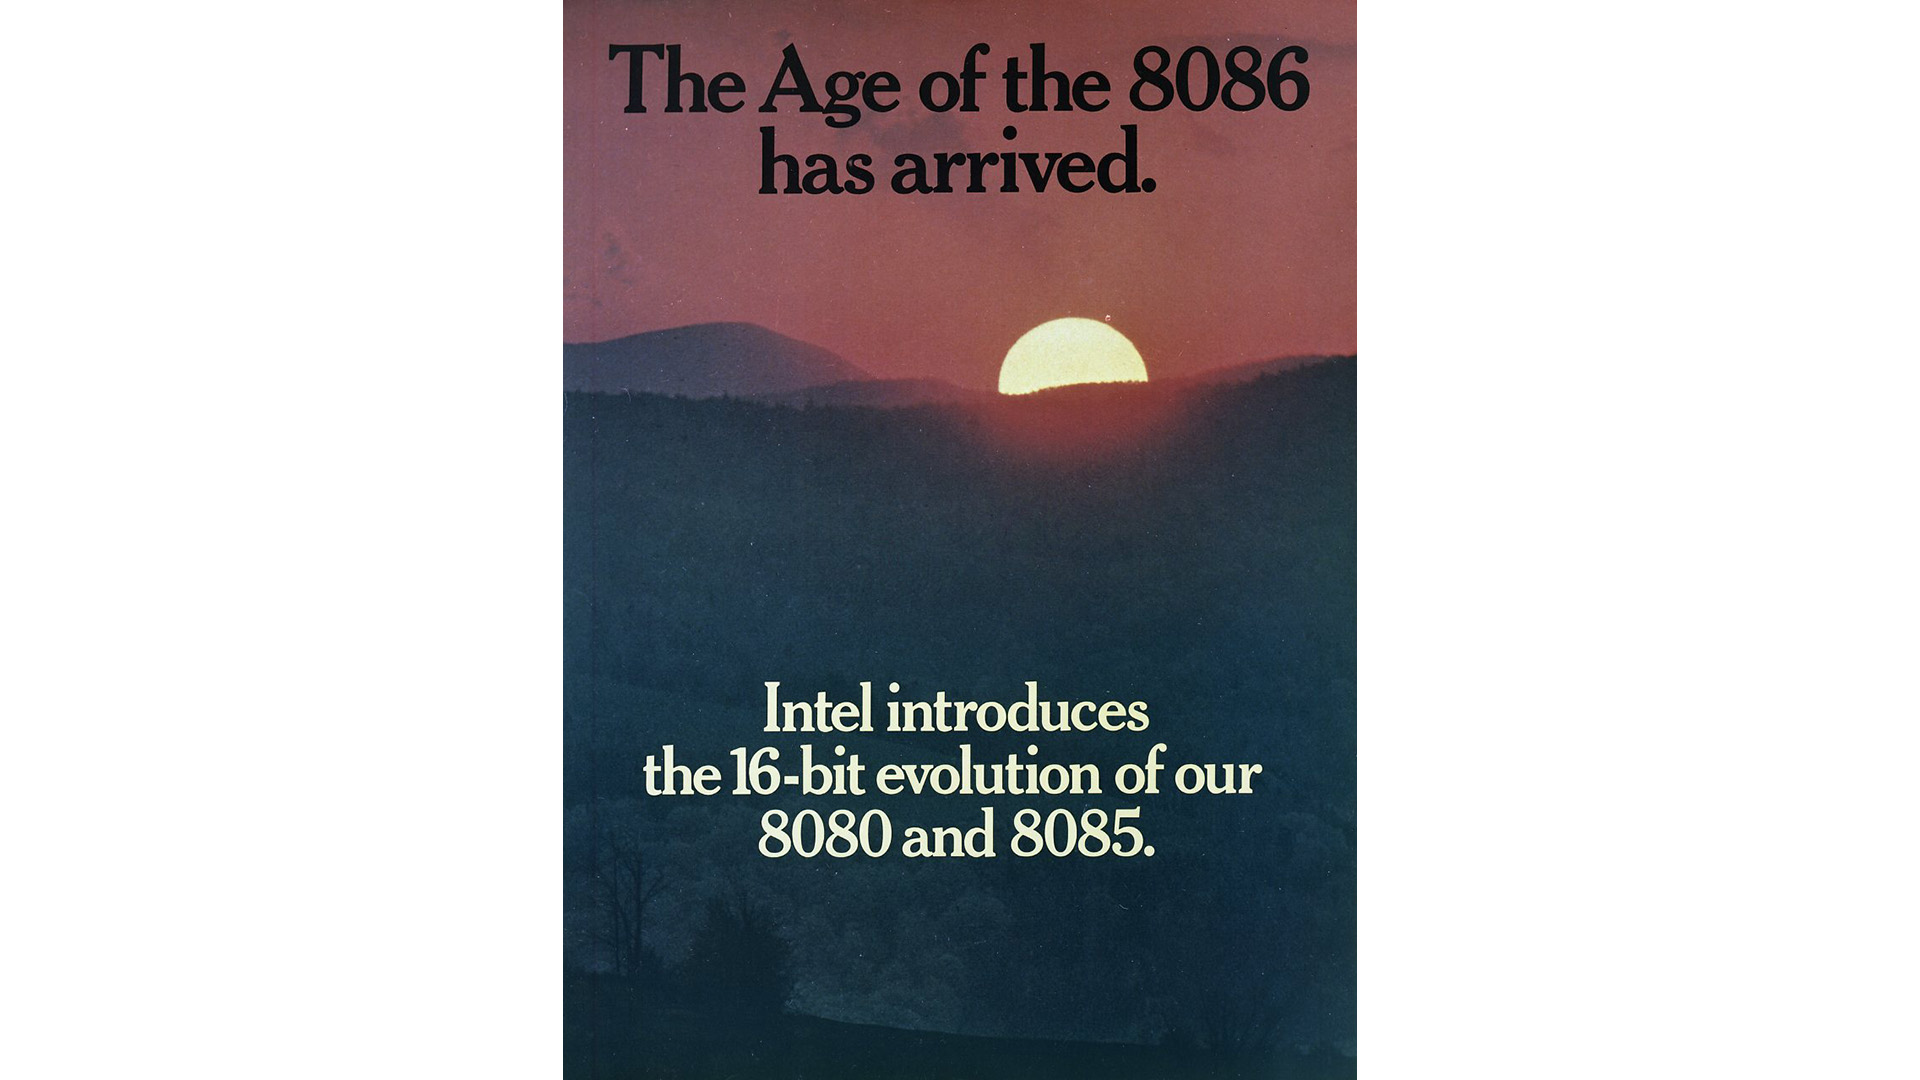 Intel 8086 magazine ad